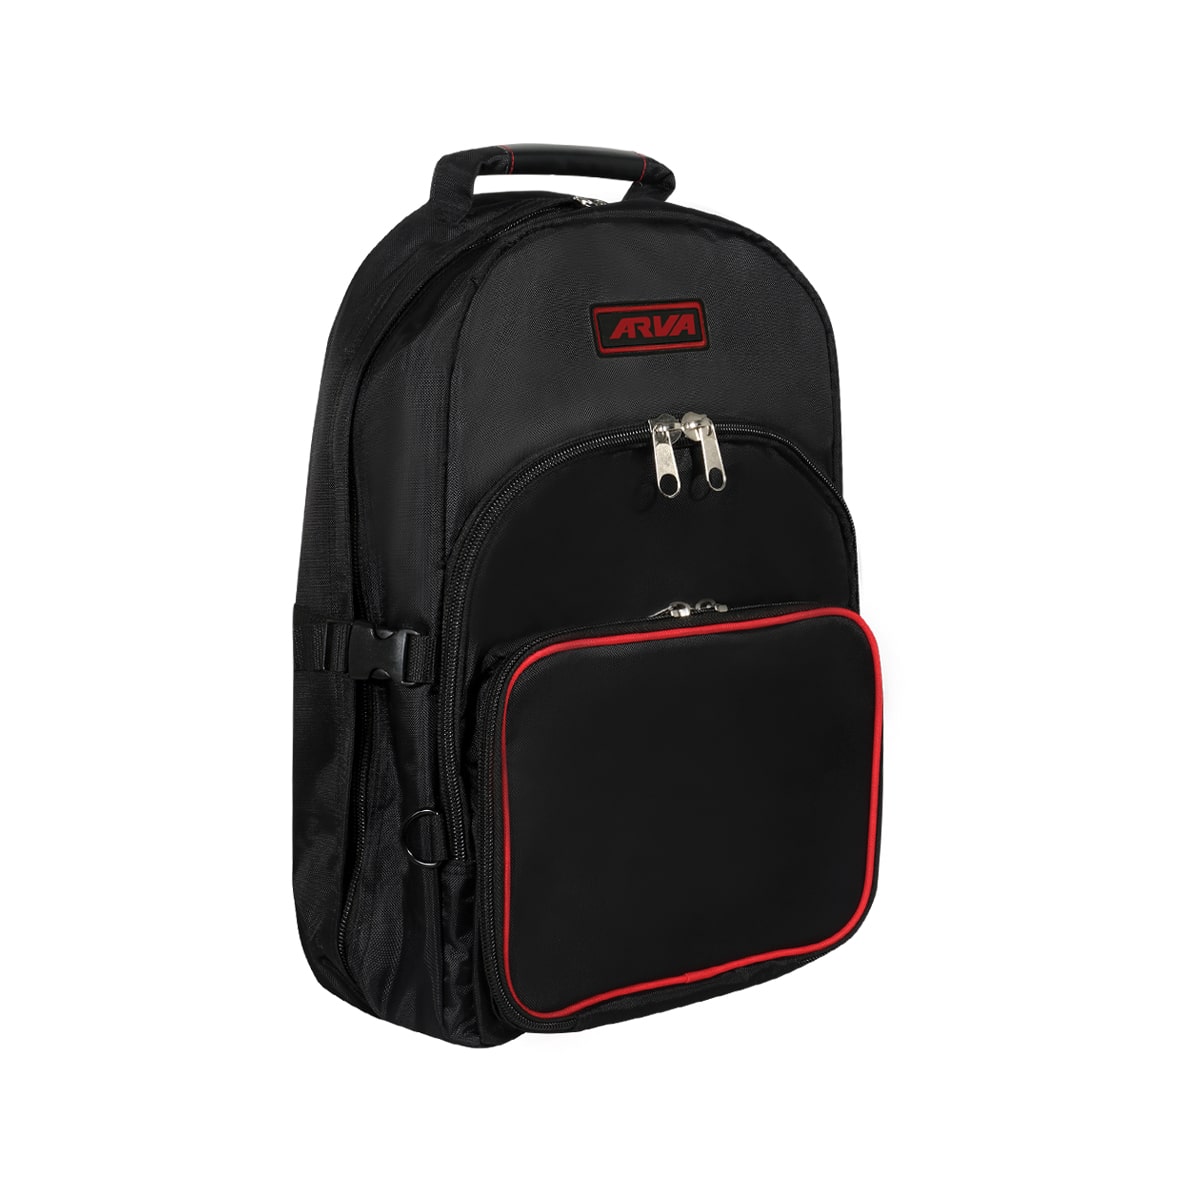 tool-backpack-model-4509